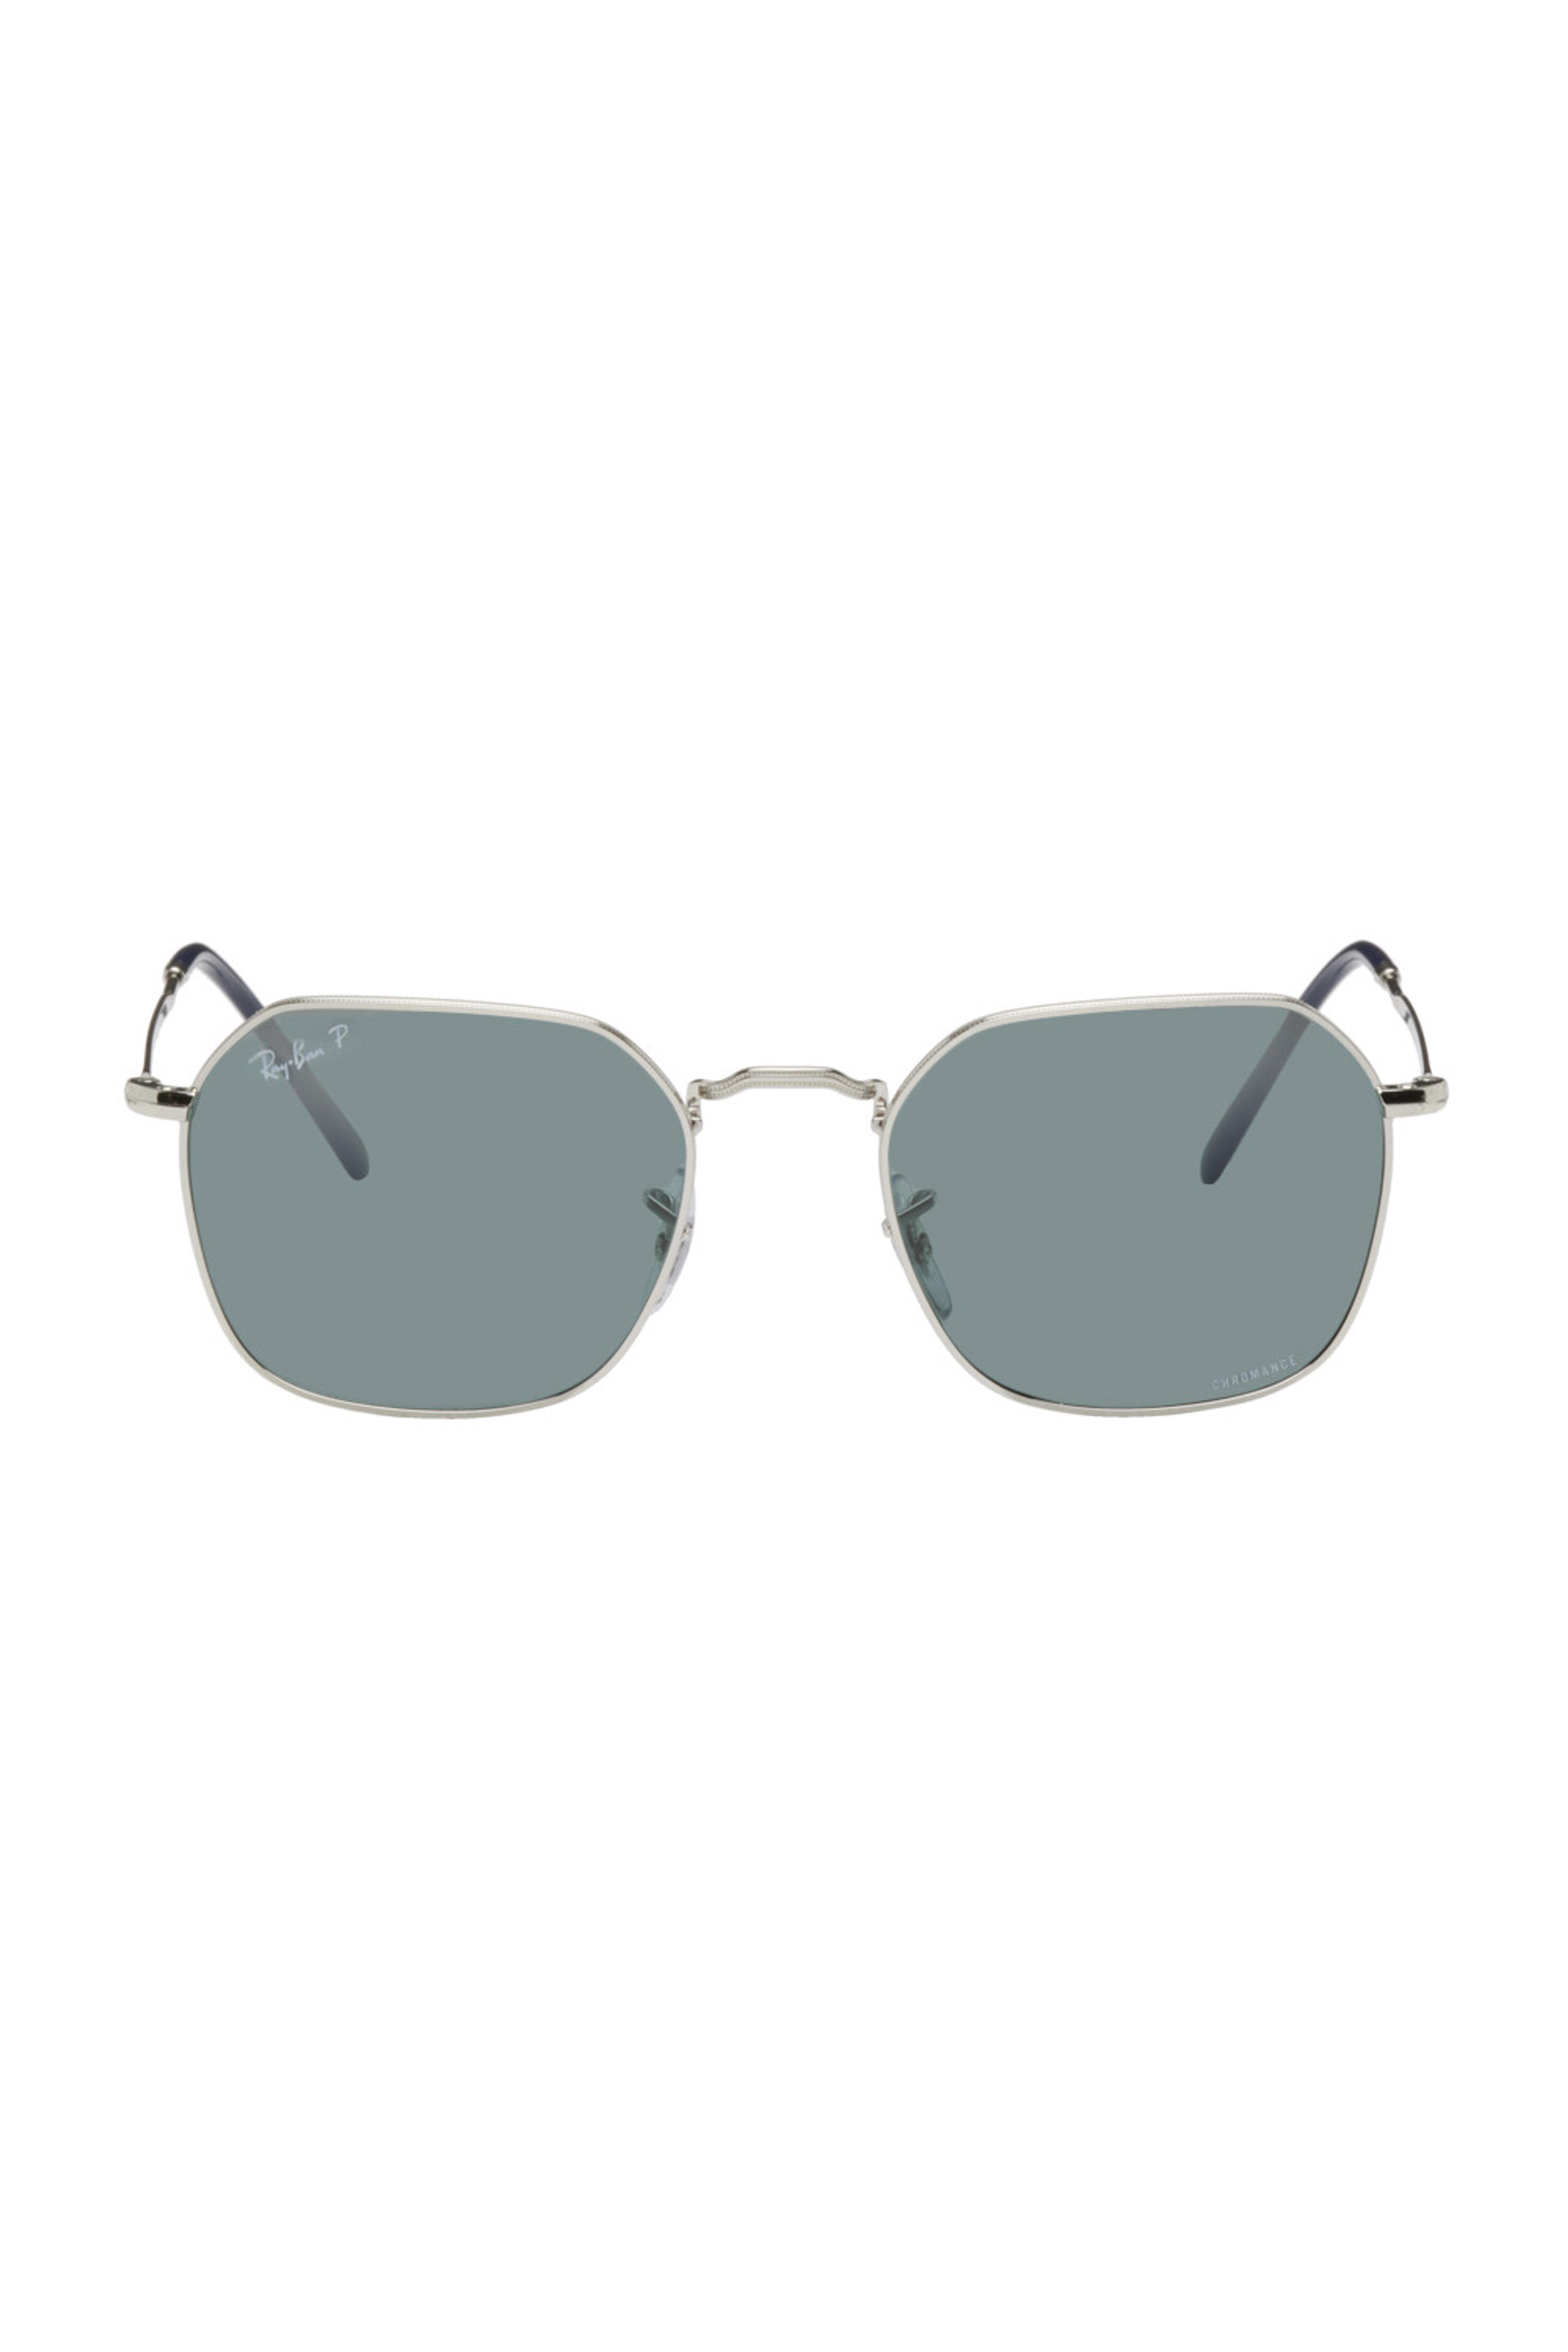 Ray-Ban: Silver Jim Sunglasses | SSENSE